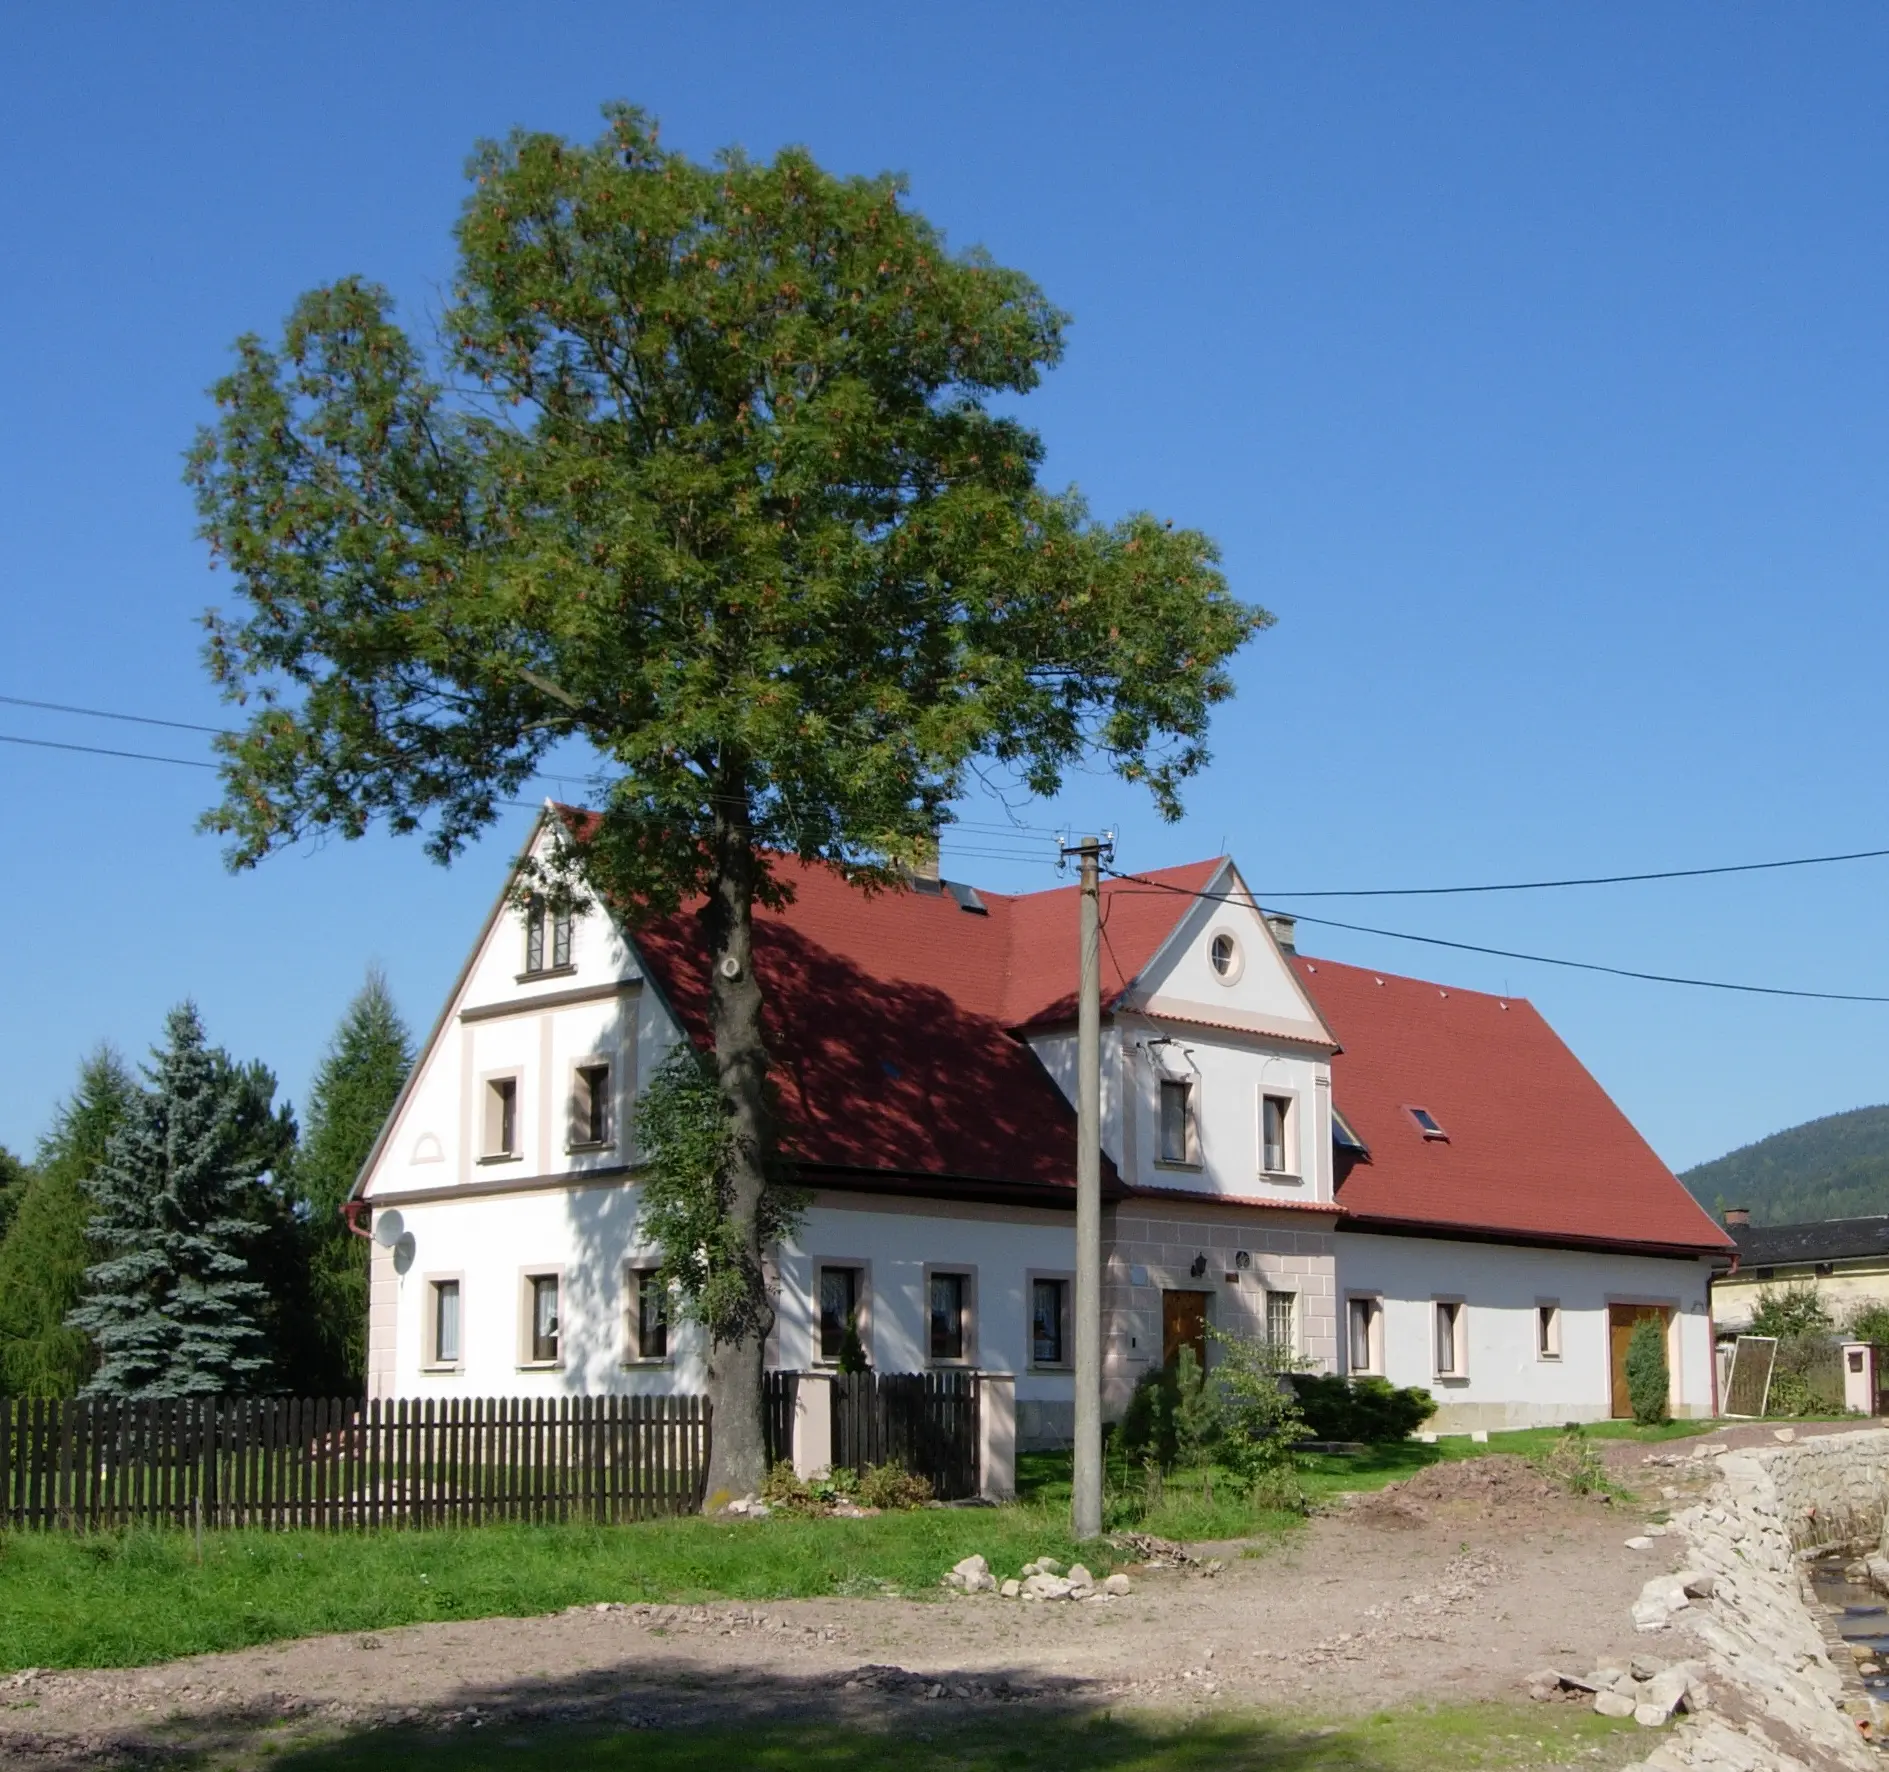 Grote chalupa bij Broumov, gemeente Mezimesti, Tsjechische Republiek.